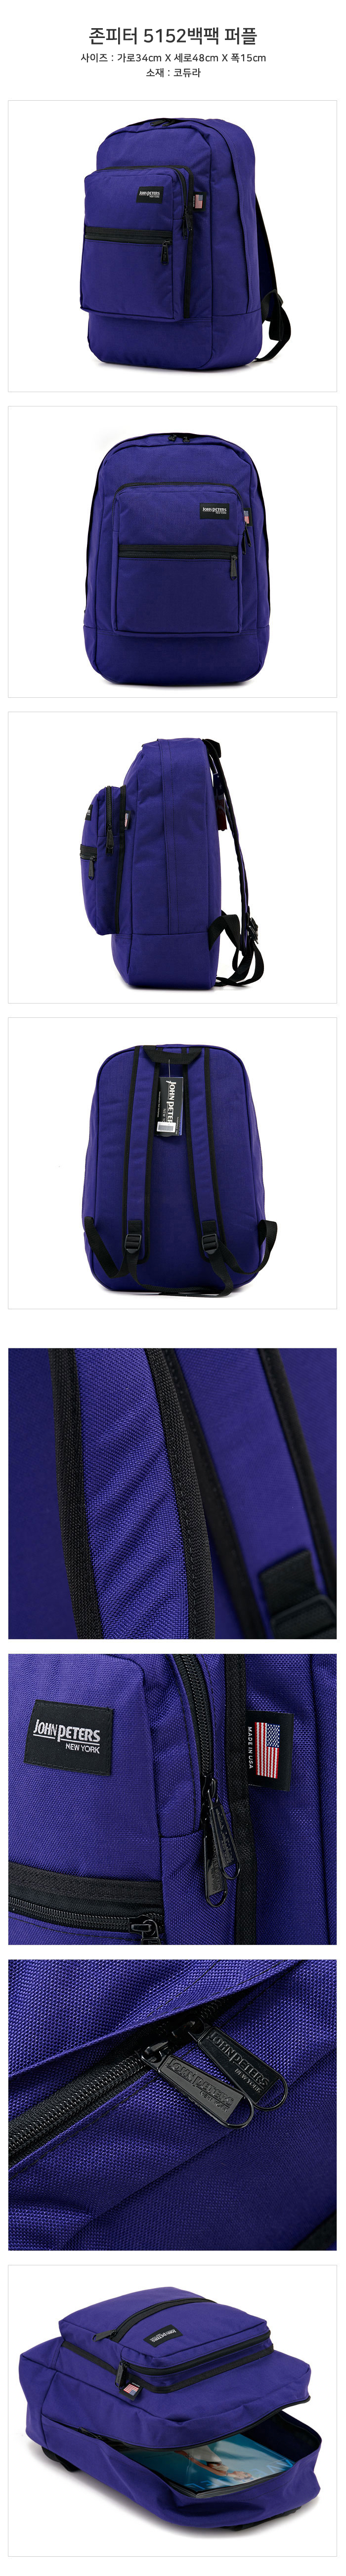 5152 Laptop Backpack Purple